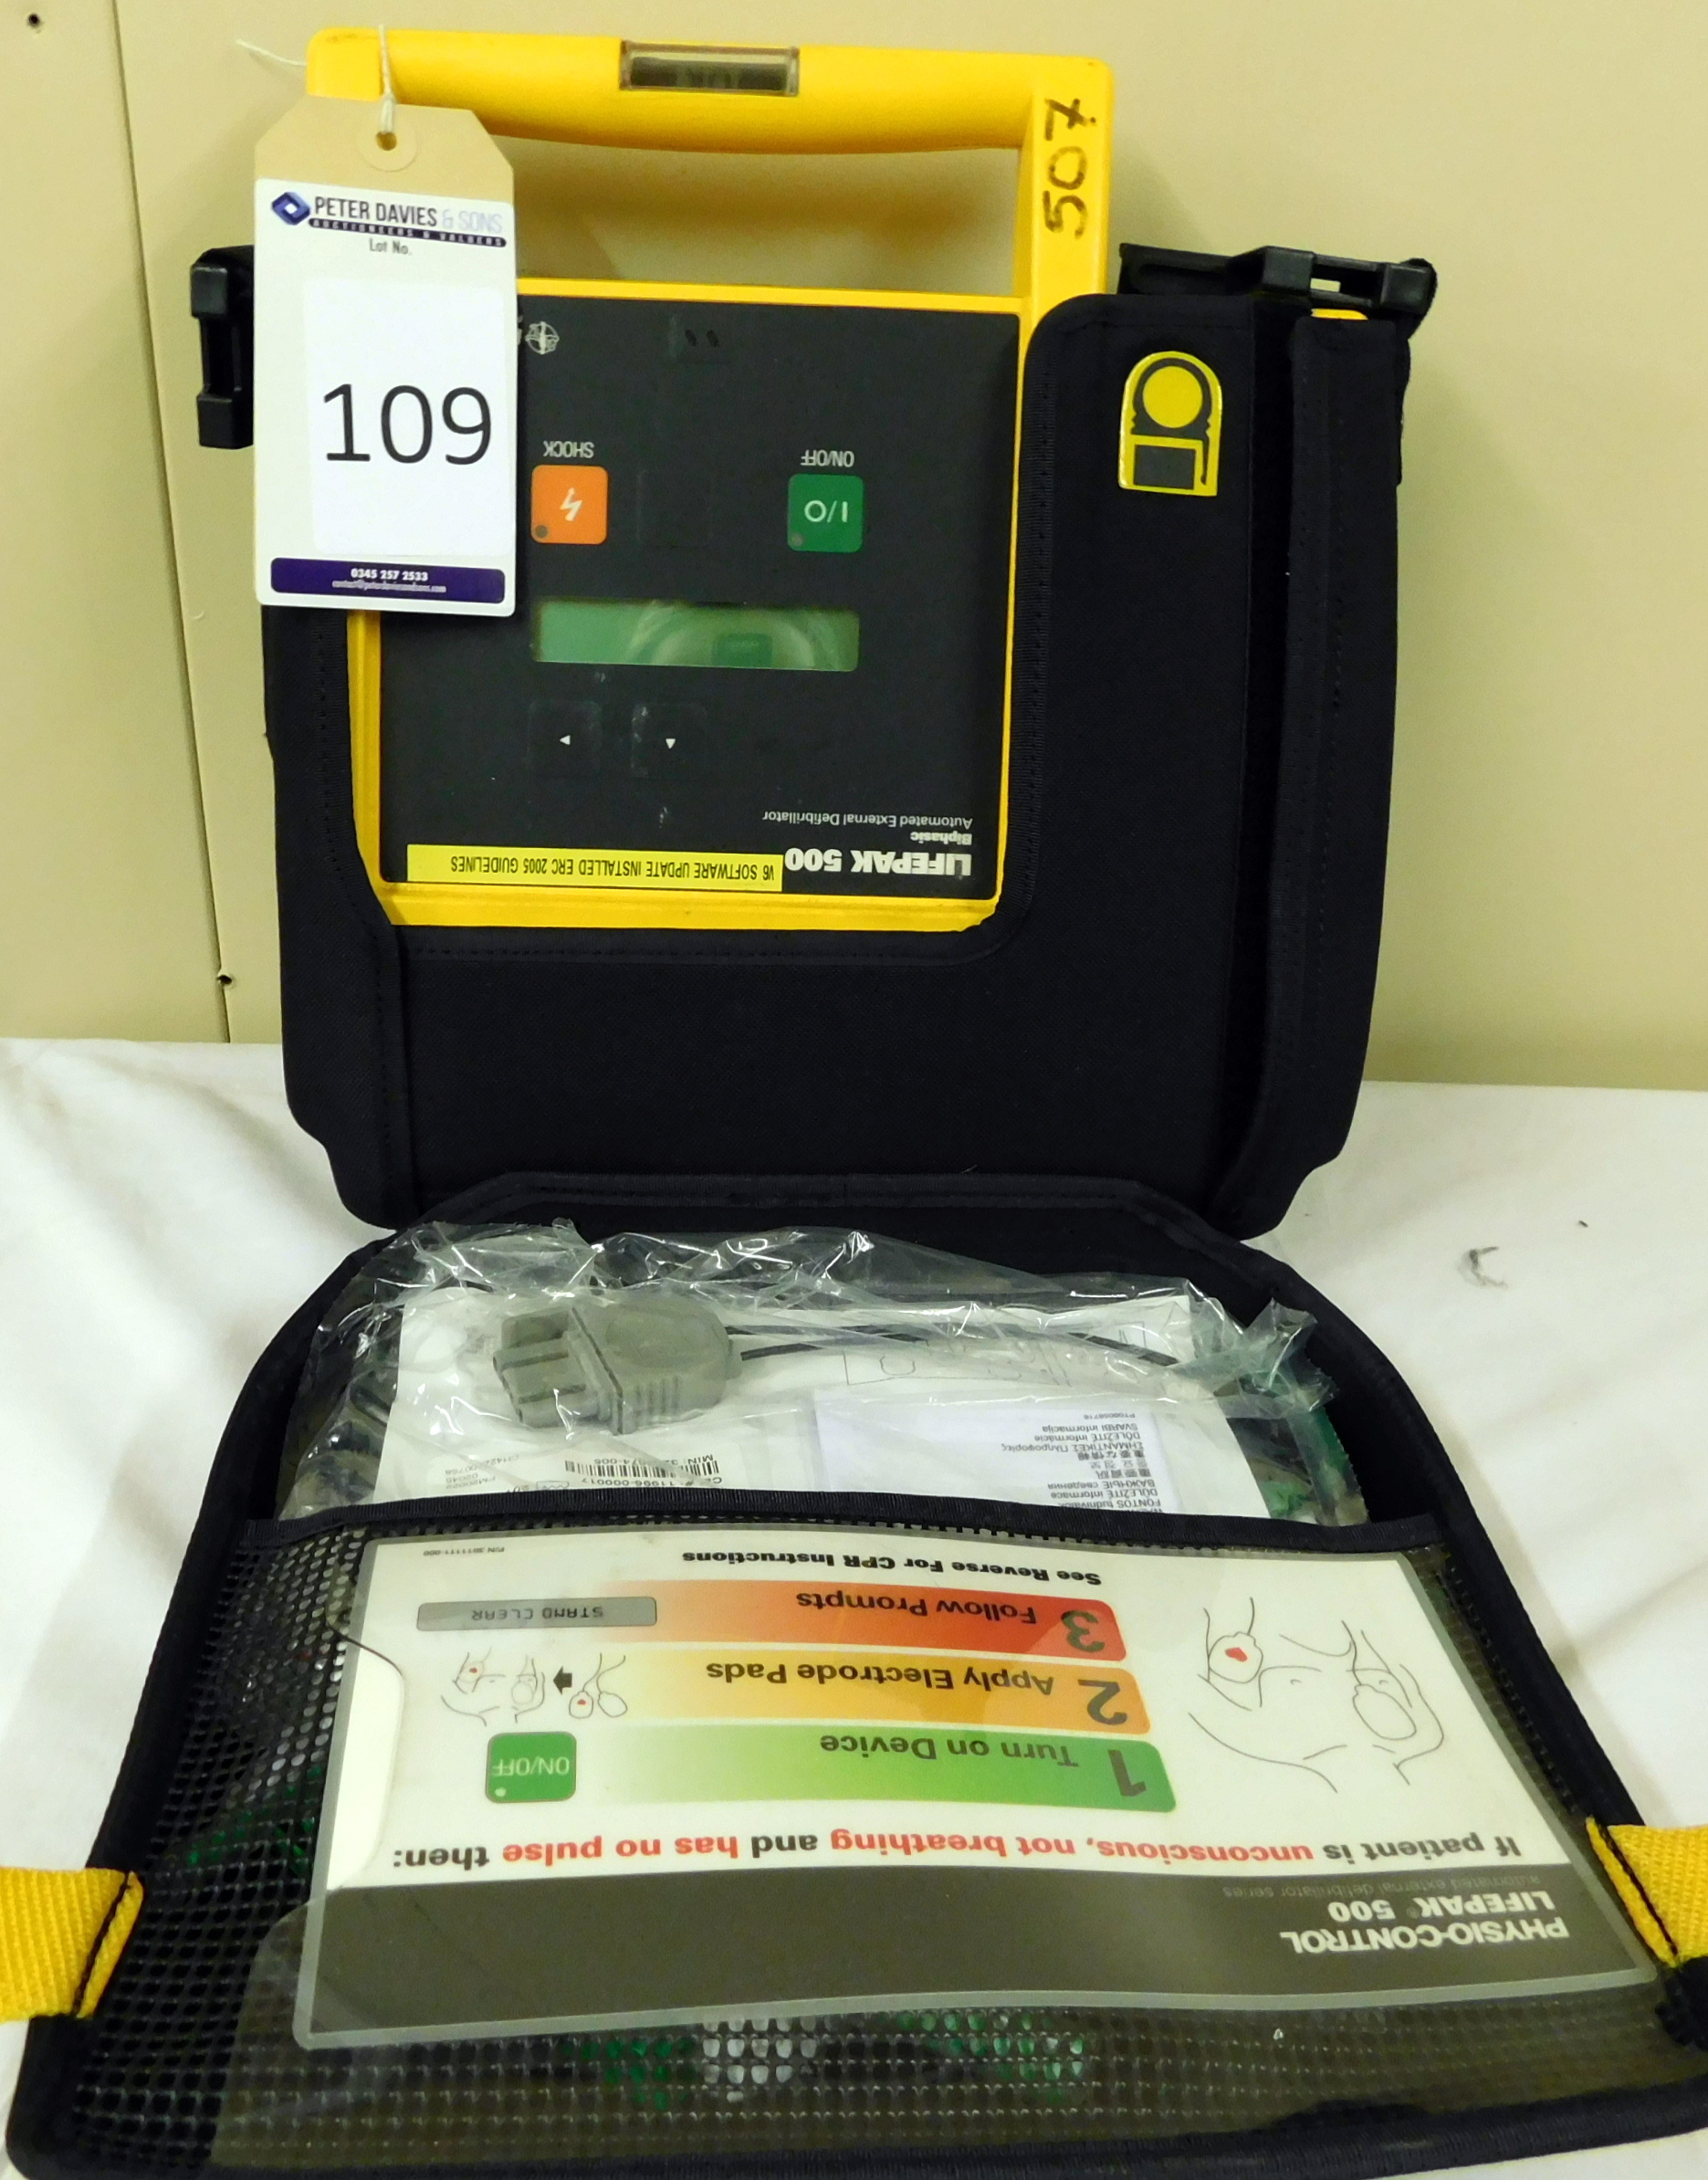 Medtronic Lifepak 500 Defibrillator, Serial Number: 30318842, Asset Number: 1005001251